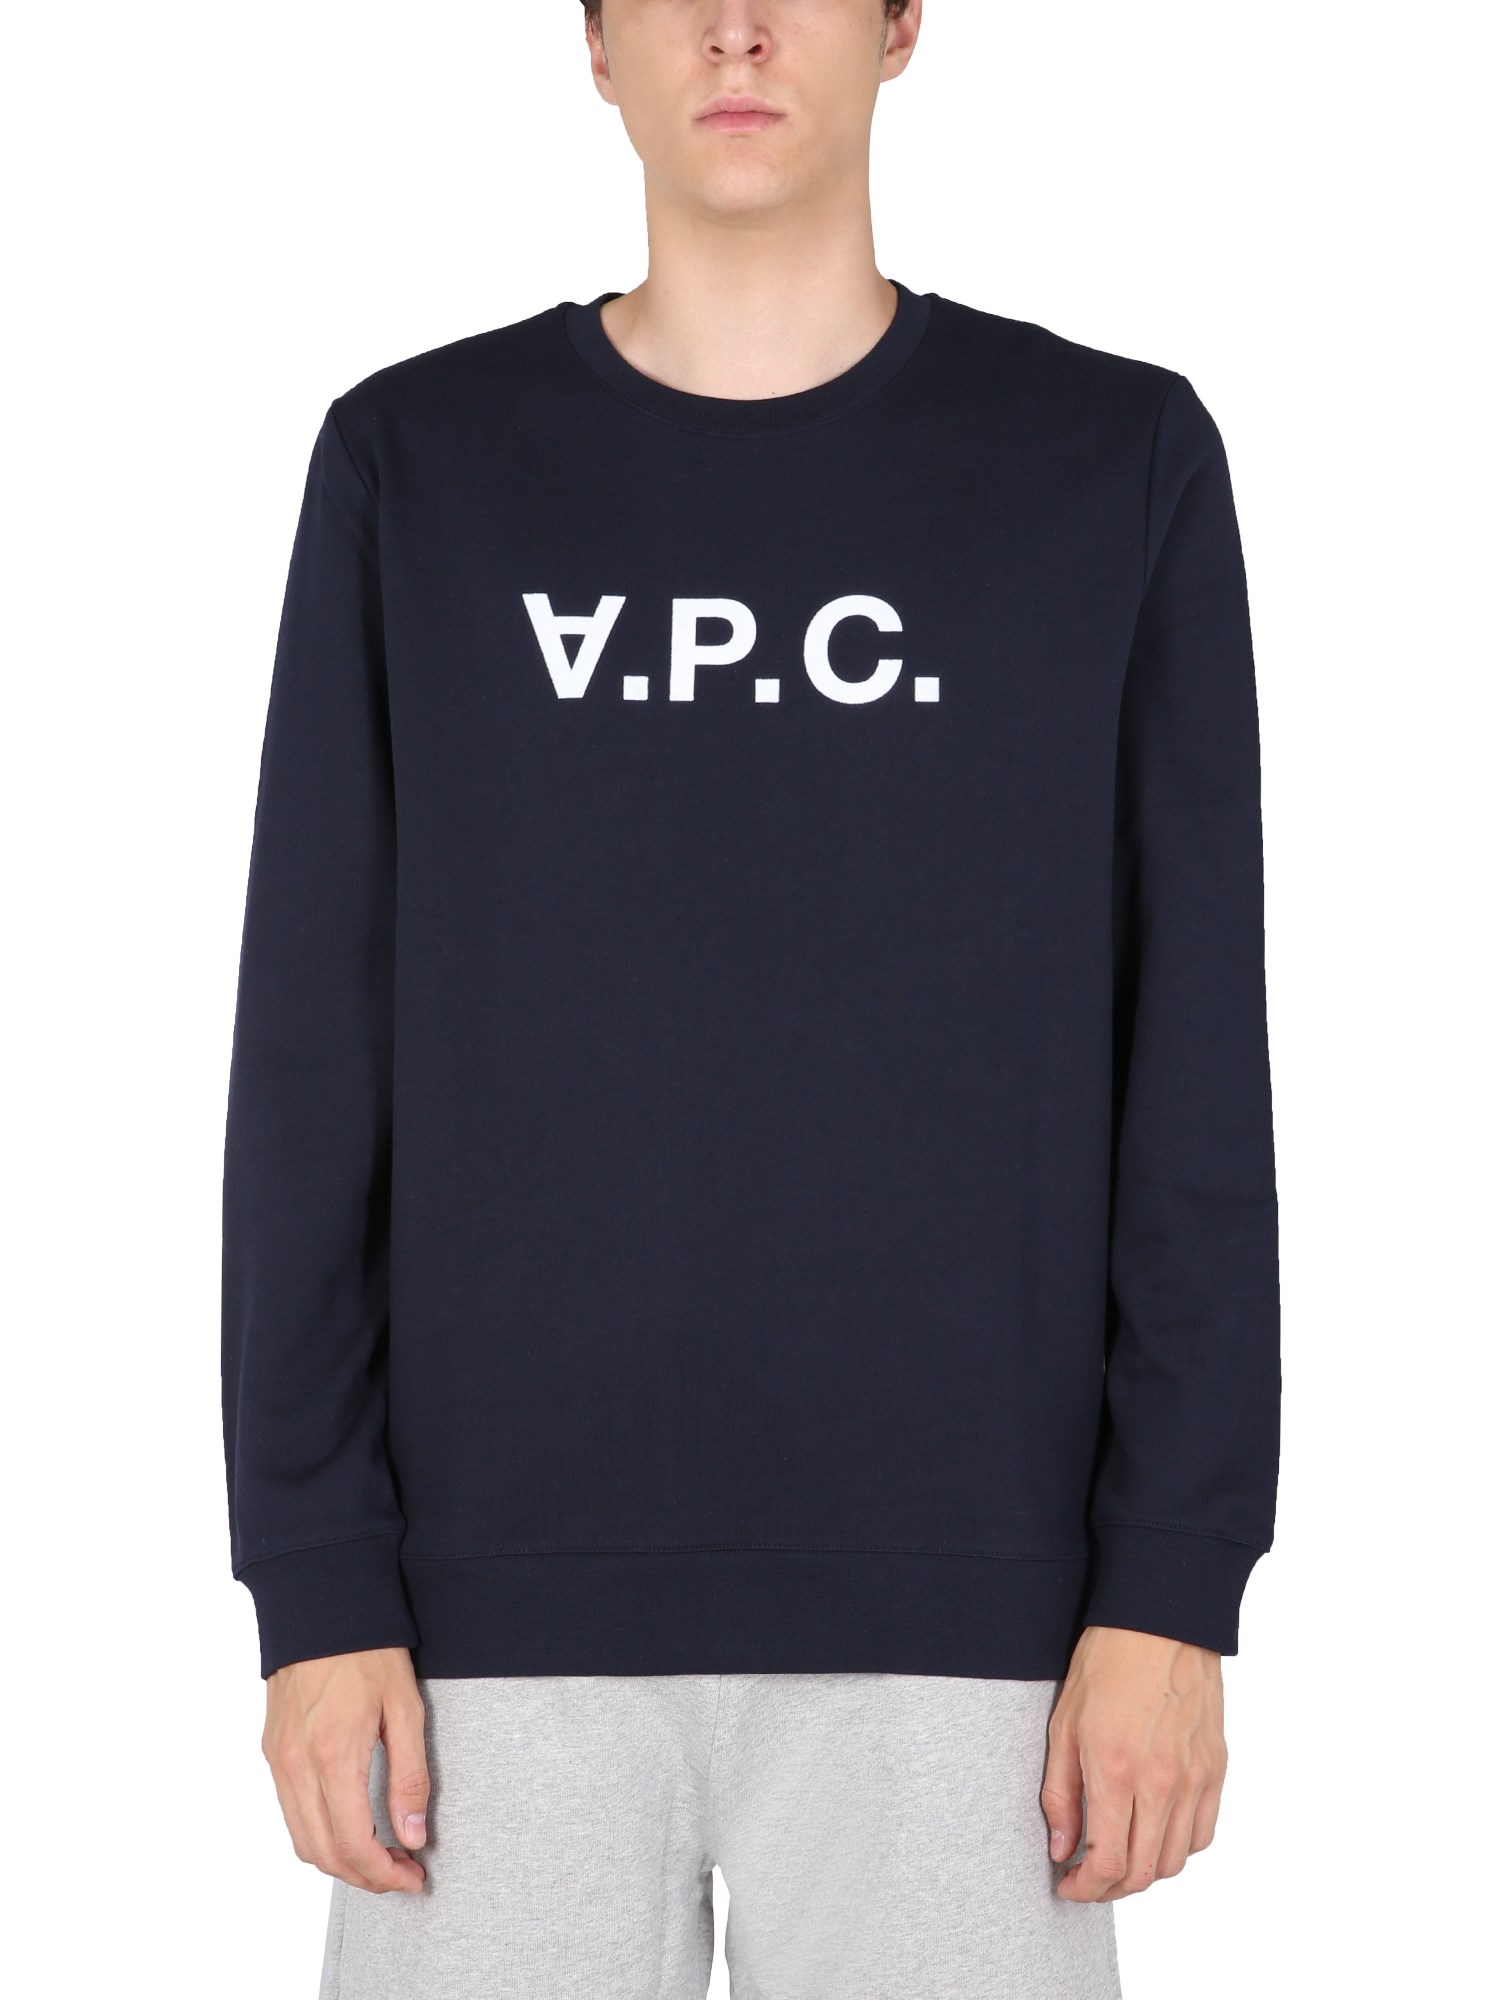 a.p.c. crew neck sweatshirt with flocked logo print